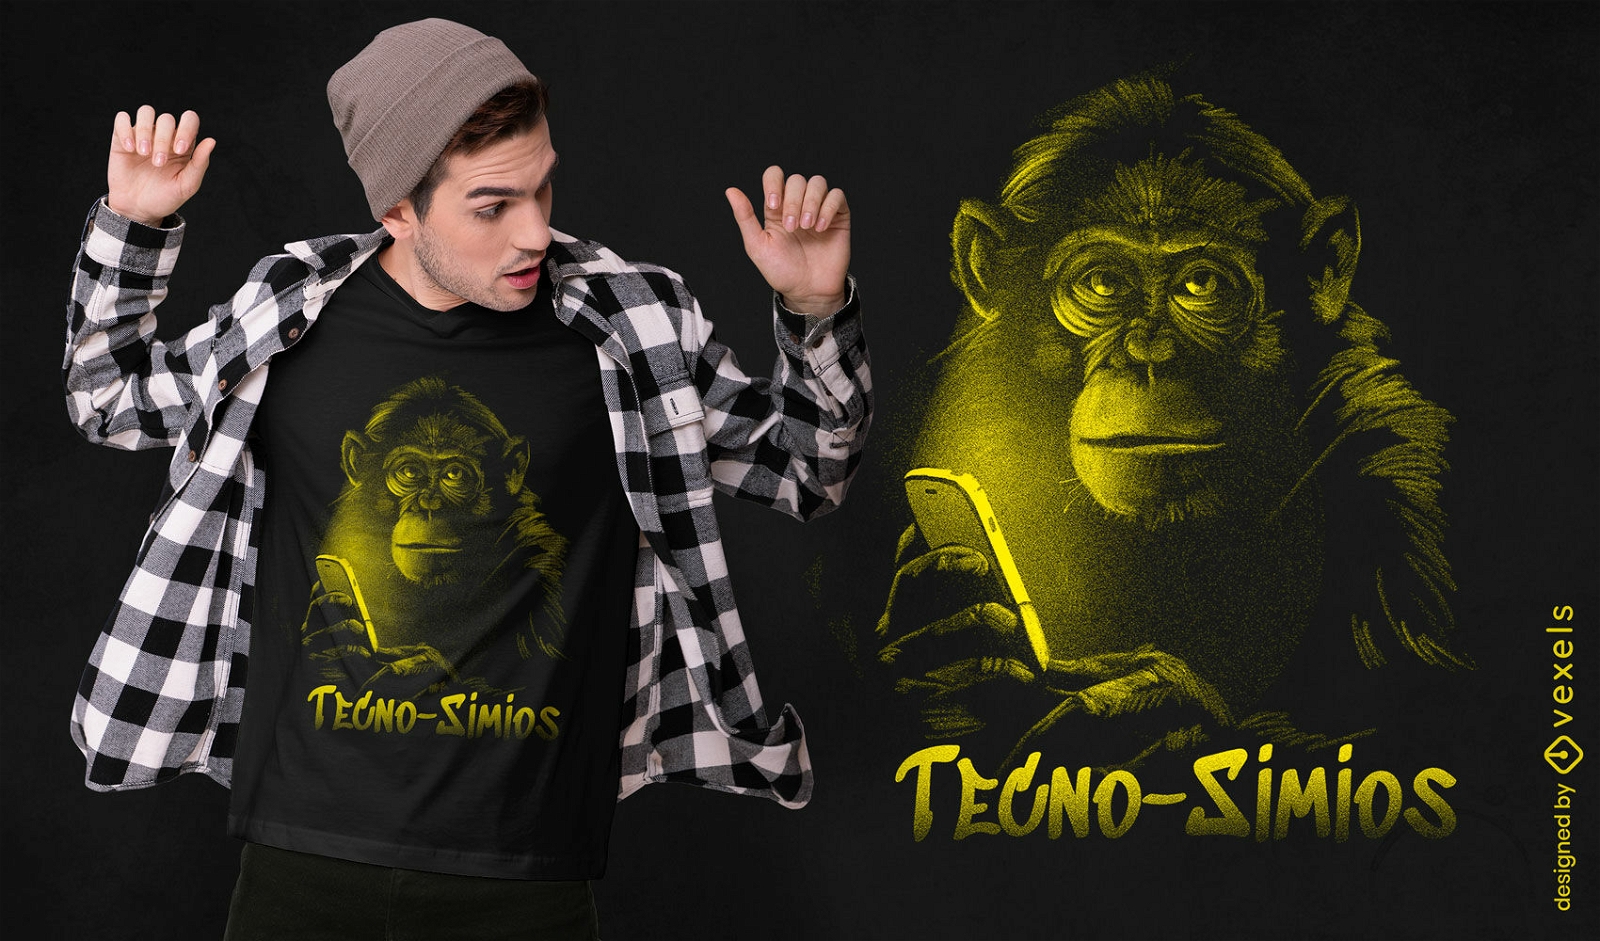 Tecno simios monkey t-shirt design